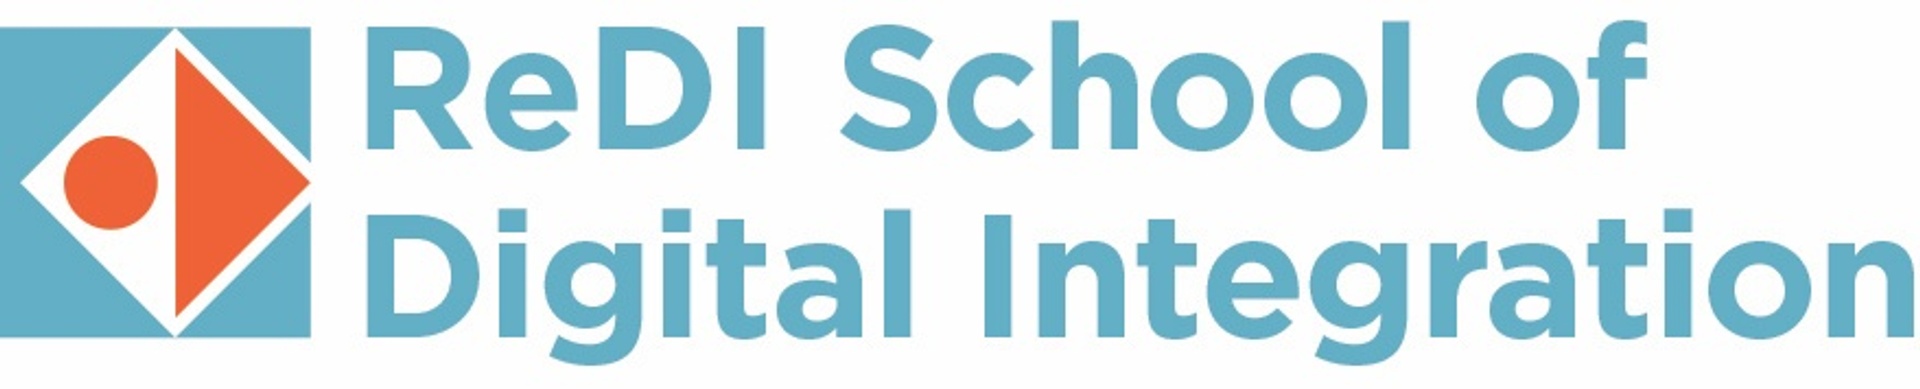 redi-school-logo